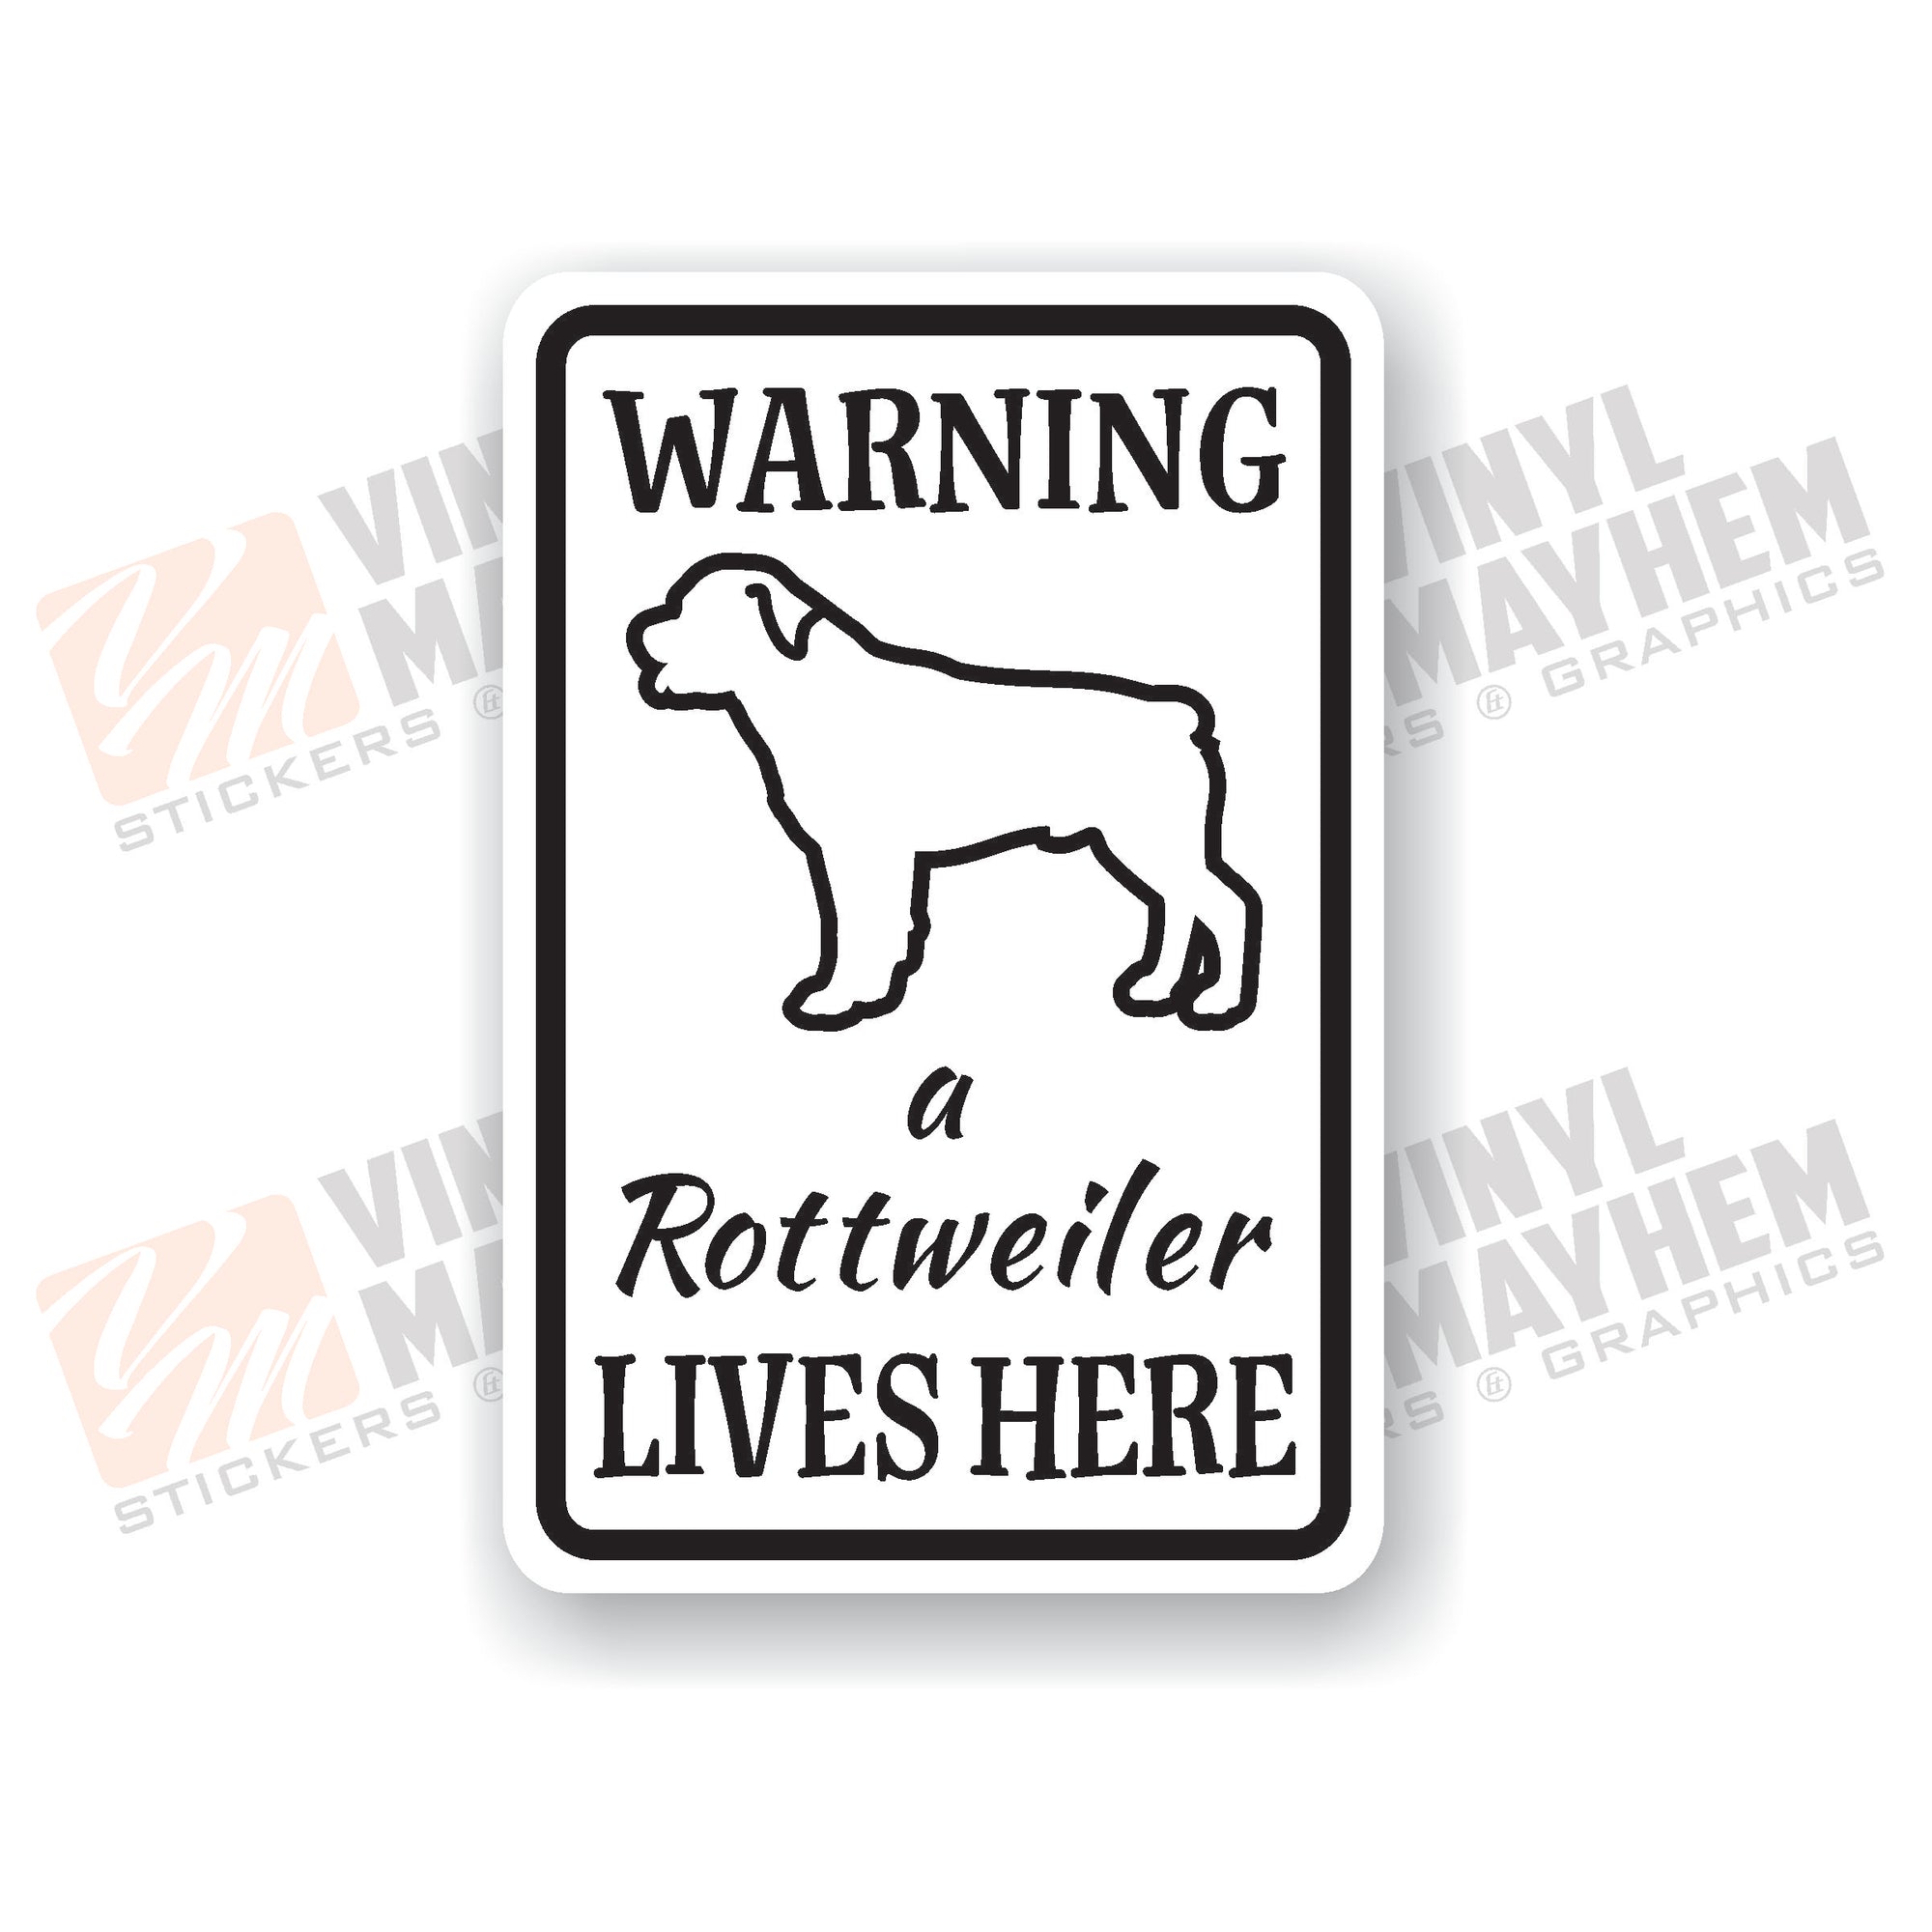 Warning a Rottweiler Lives Here aluminum sign